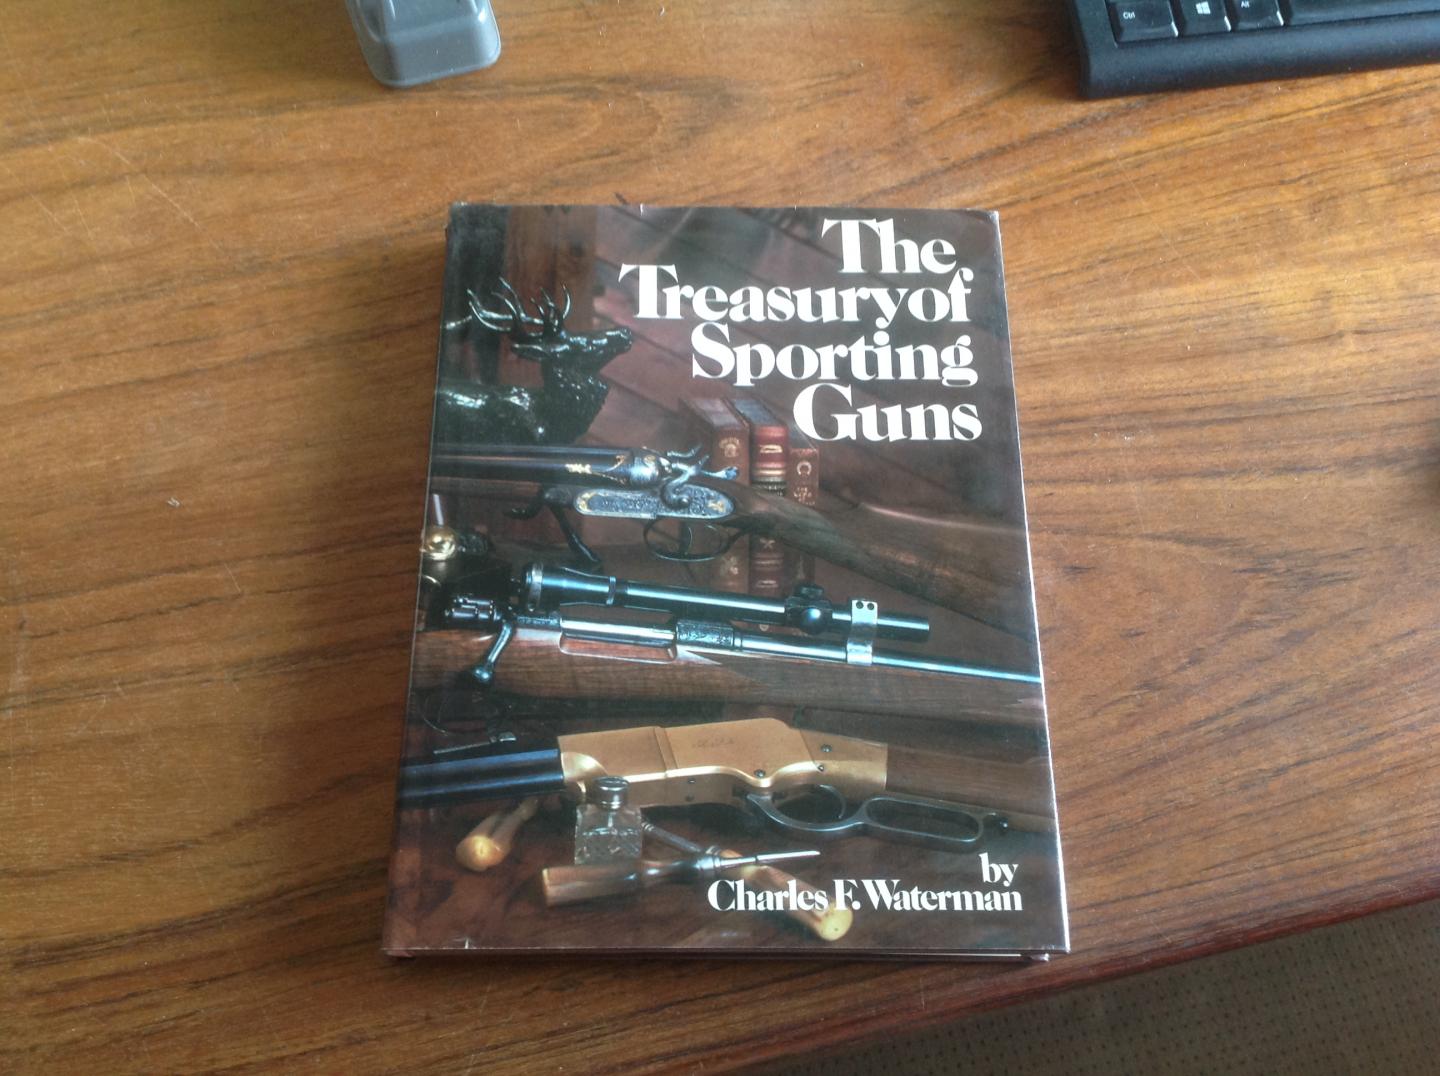 Charles F. Waterman - The Treasury of Sporting Guns